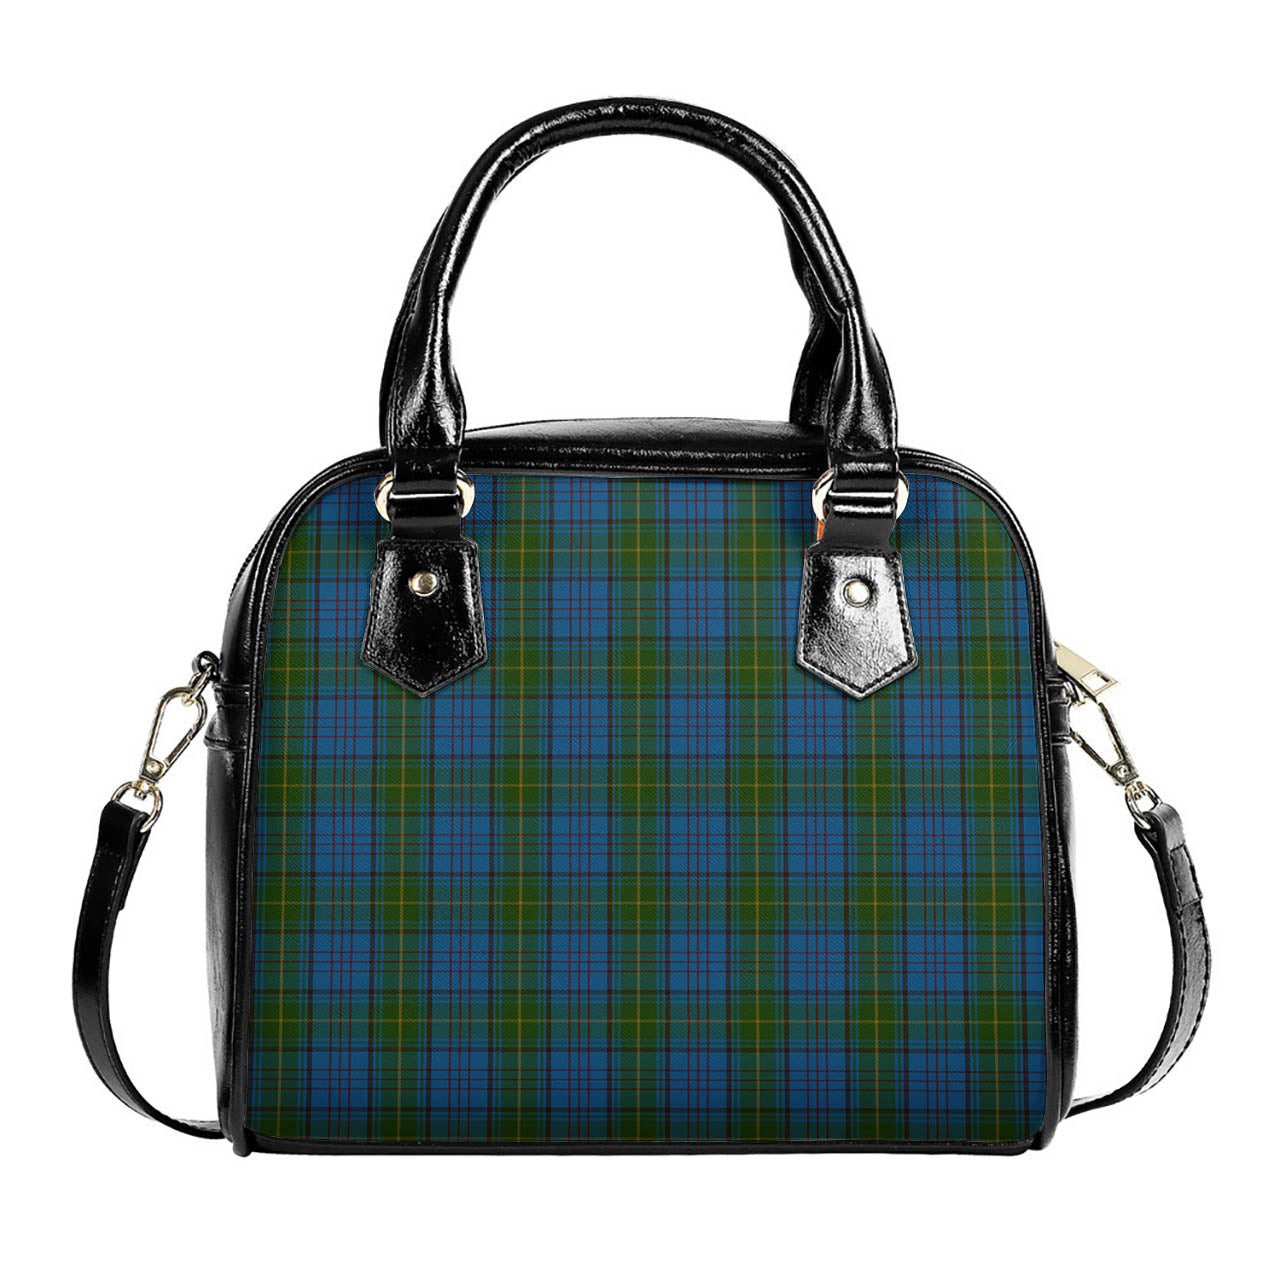 Donegal County Ireland Tartan Shoulder Handbags One Size 6*25*22 cm - Tartanvibesclothing